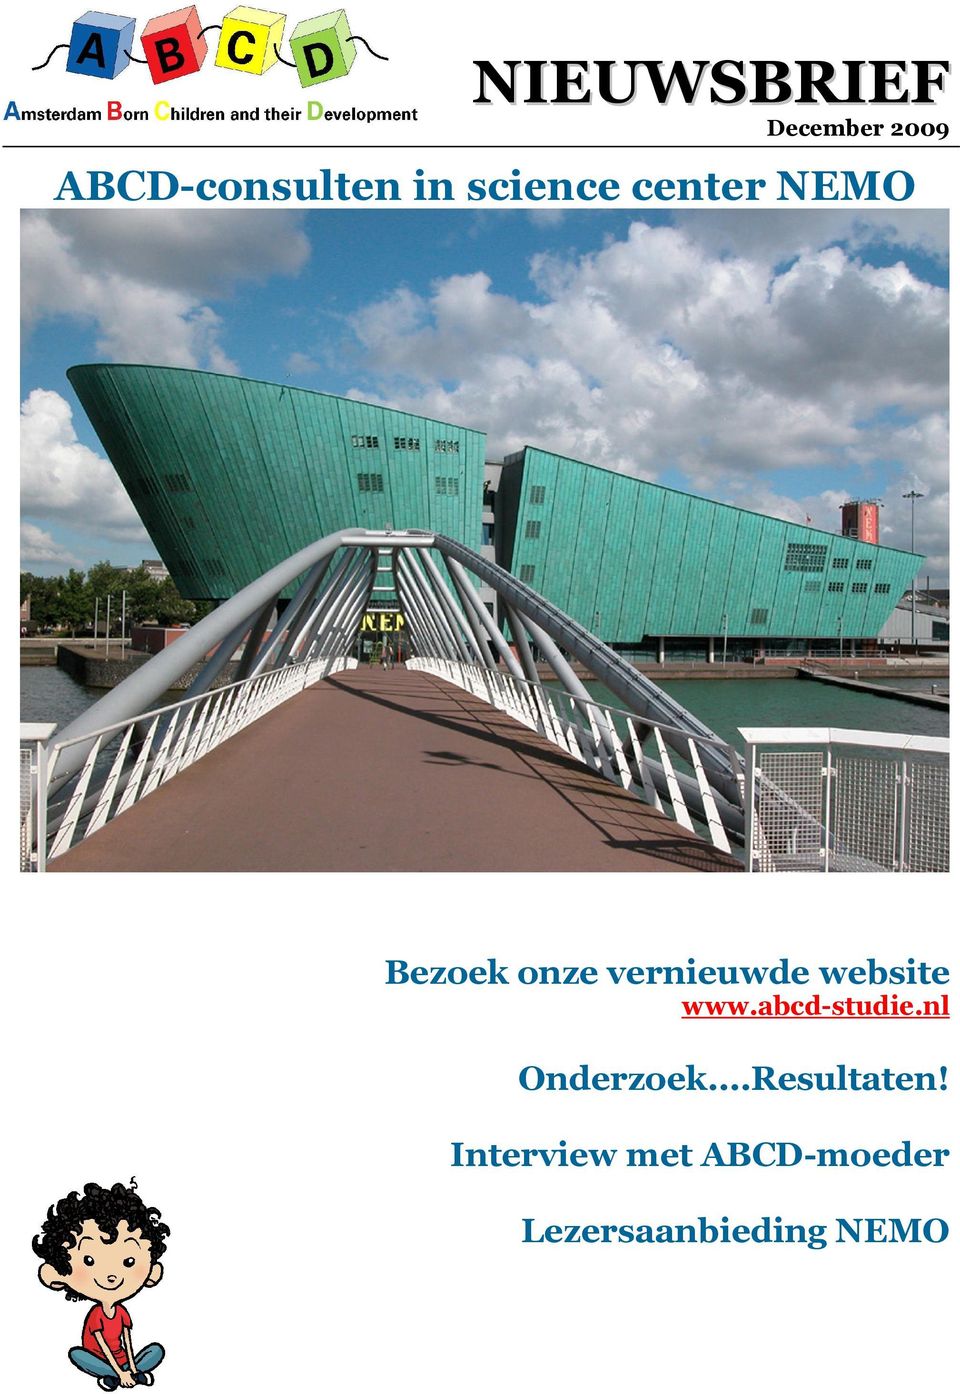 website www.abcd-studie.nl Onderzoek.